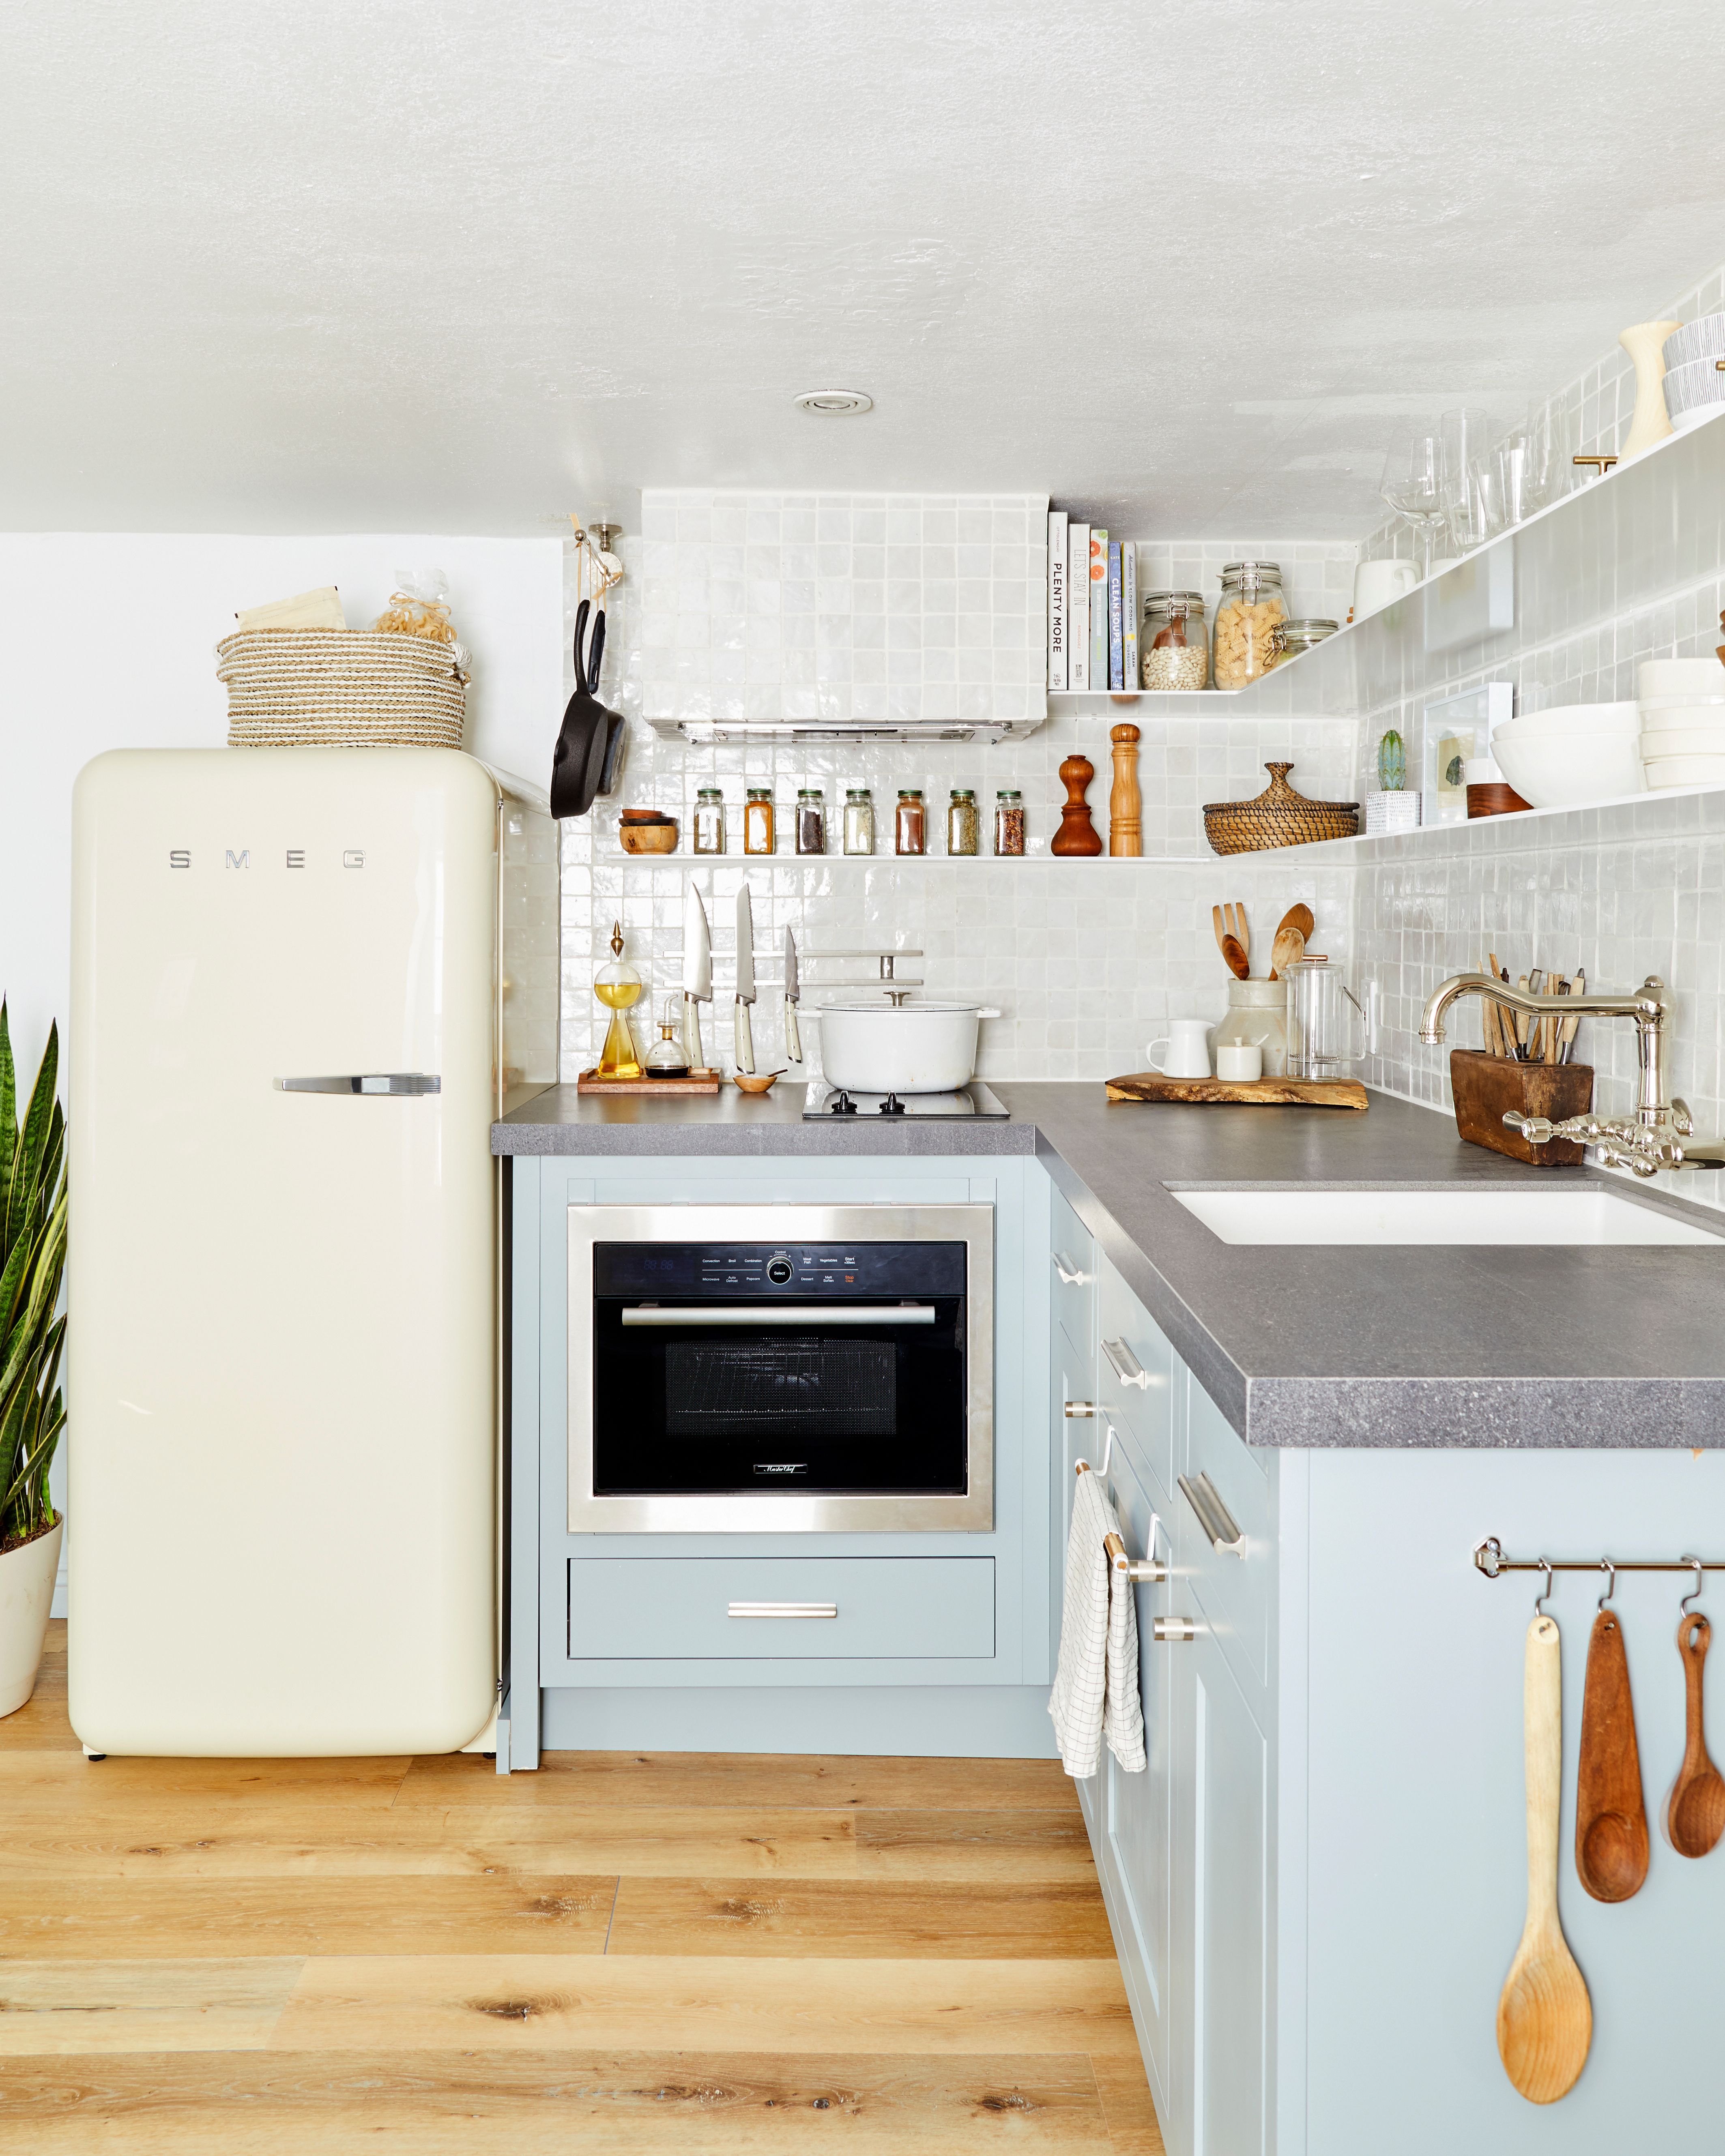 20 Best Small Kitchen Design Ideas   Small Kitchen Layout Photos